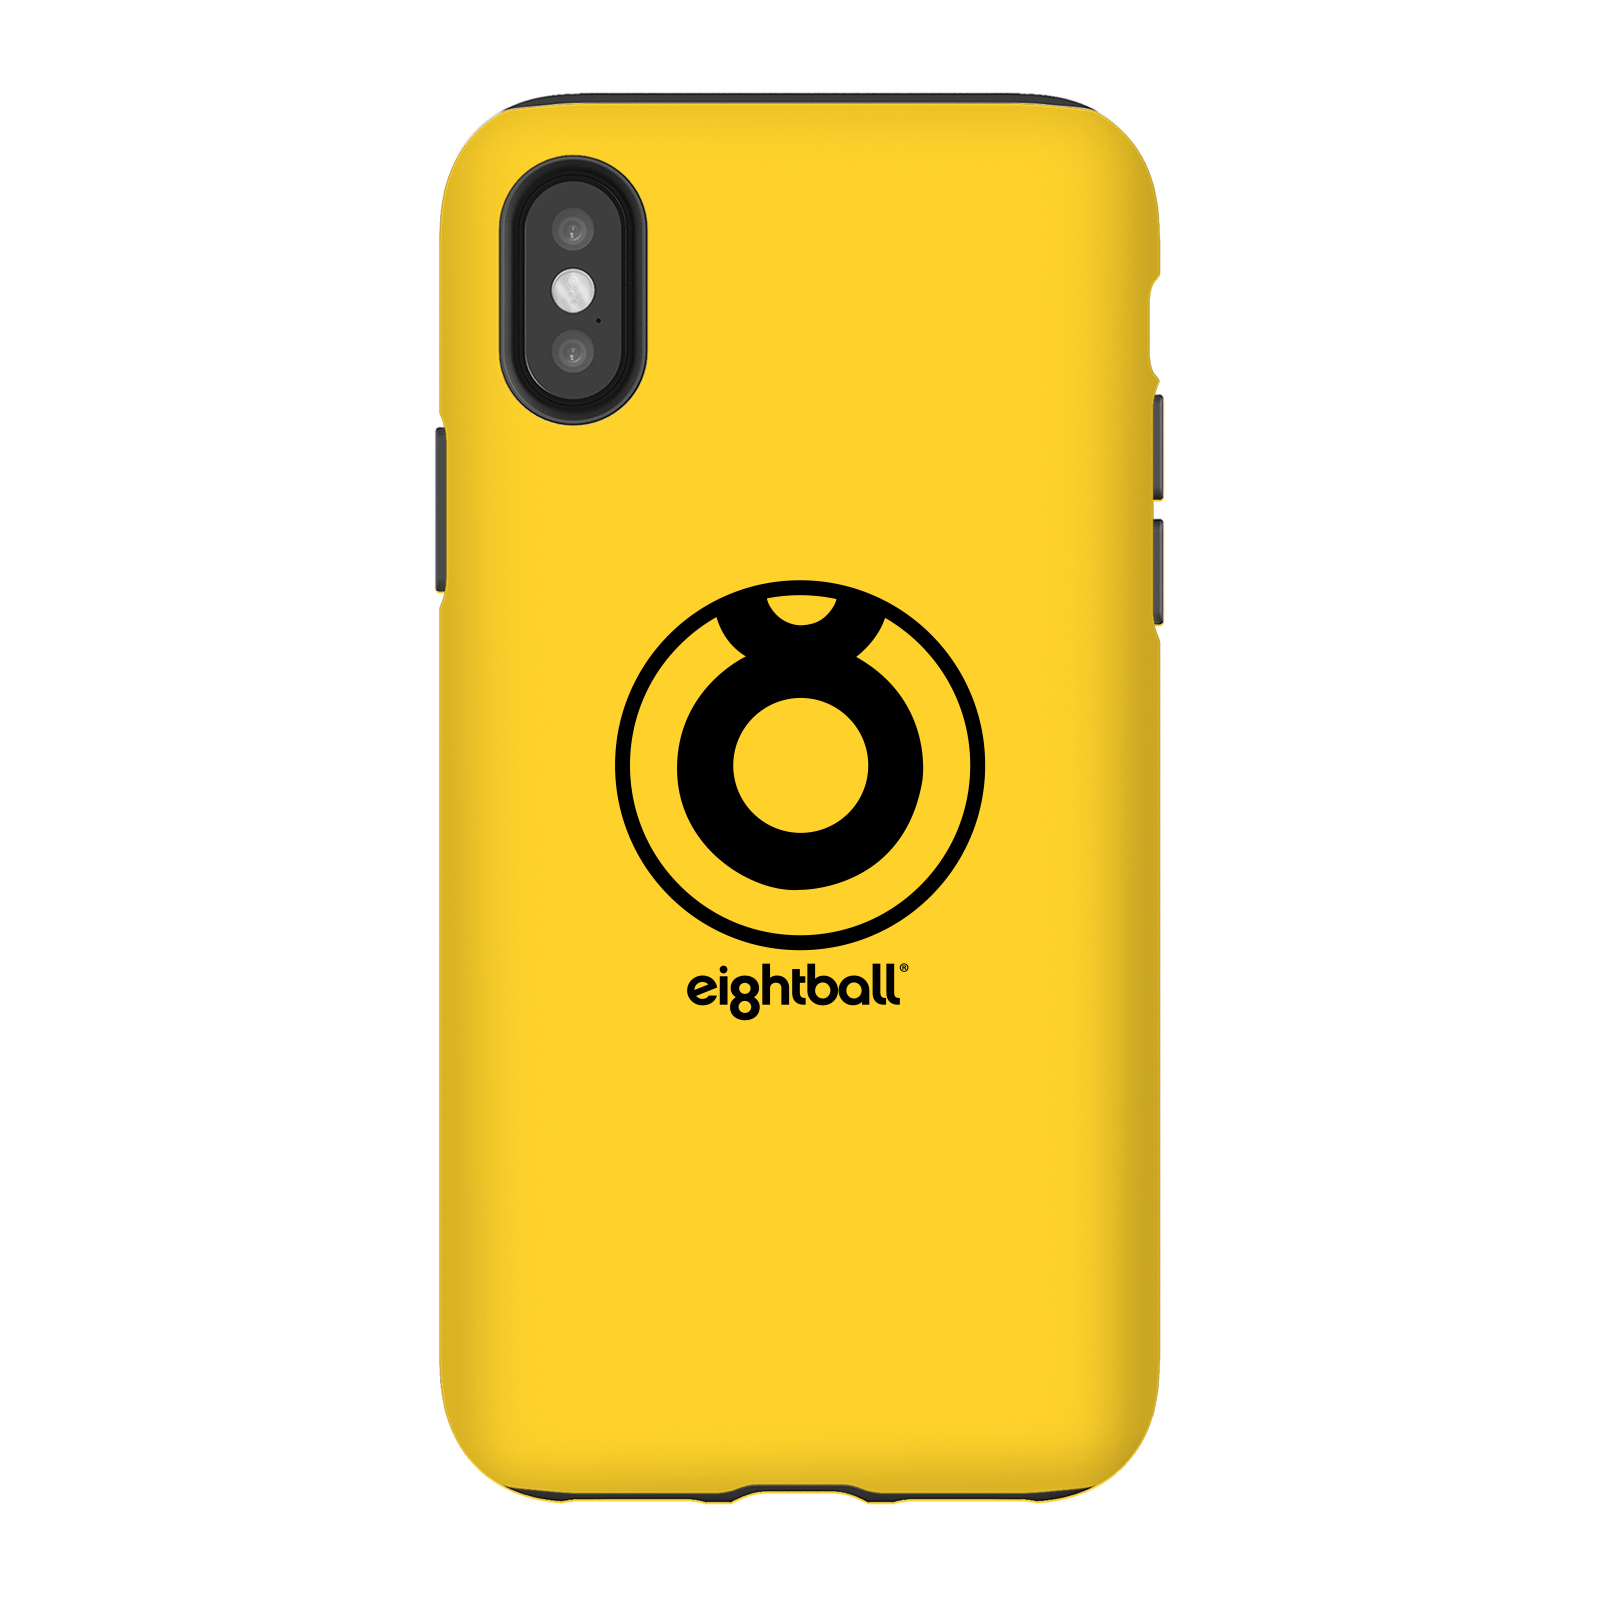 Funda Móvil Ei8htball Large Circle Logo para iPhone y Android - iPhone X - Carcasa doble capa - Brillante